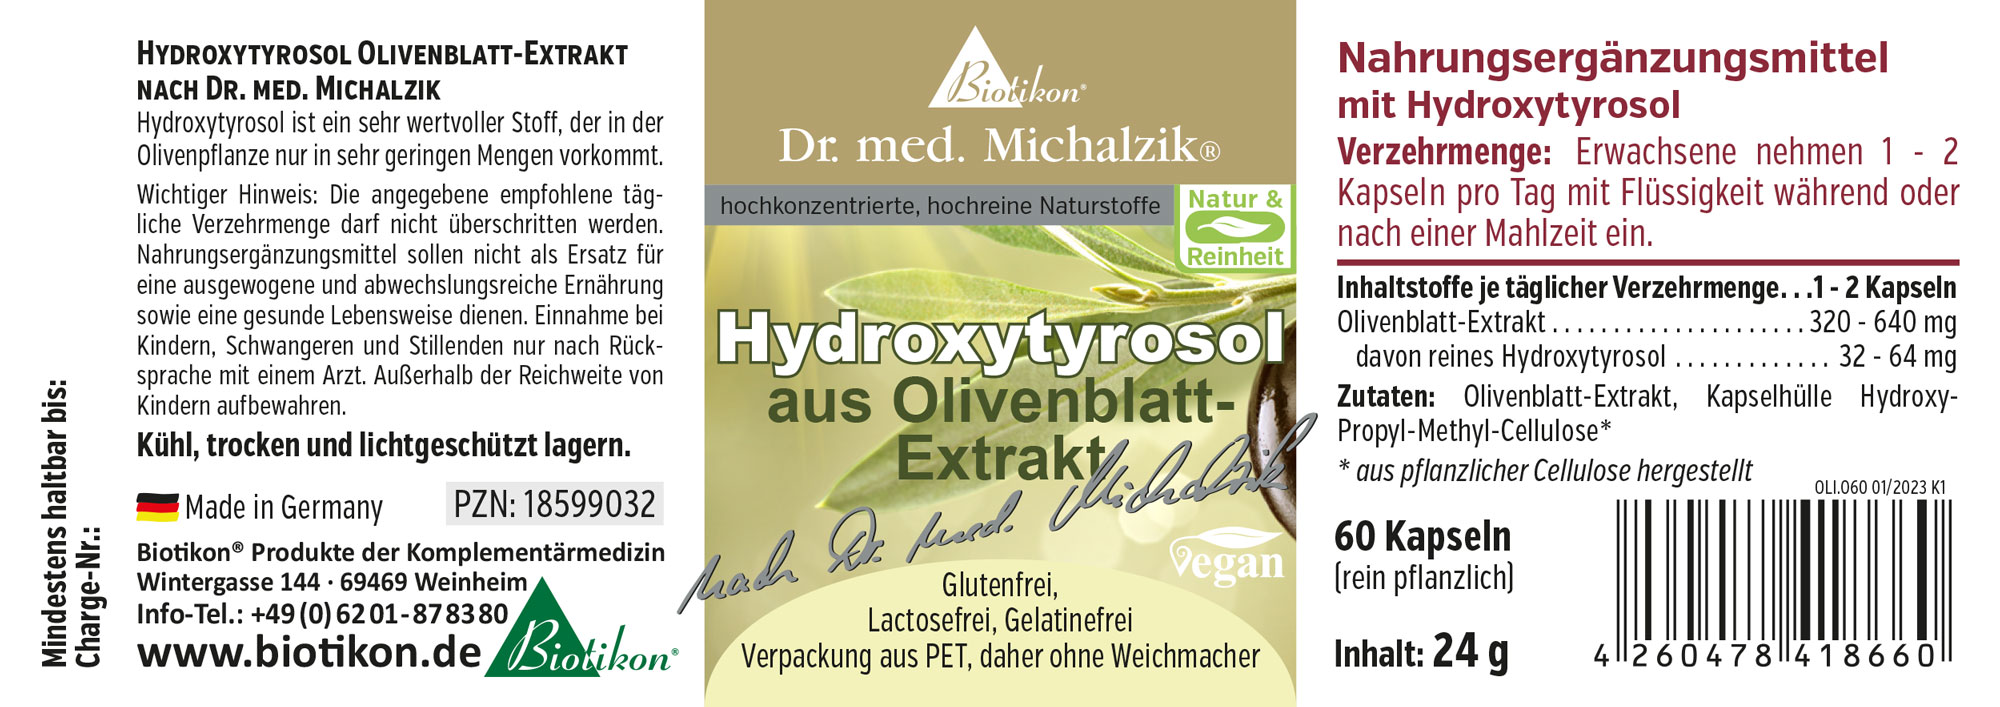 Hydroxytyrosol Olive Leaf Extract